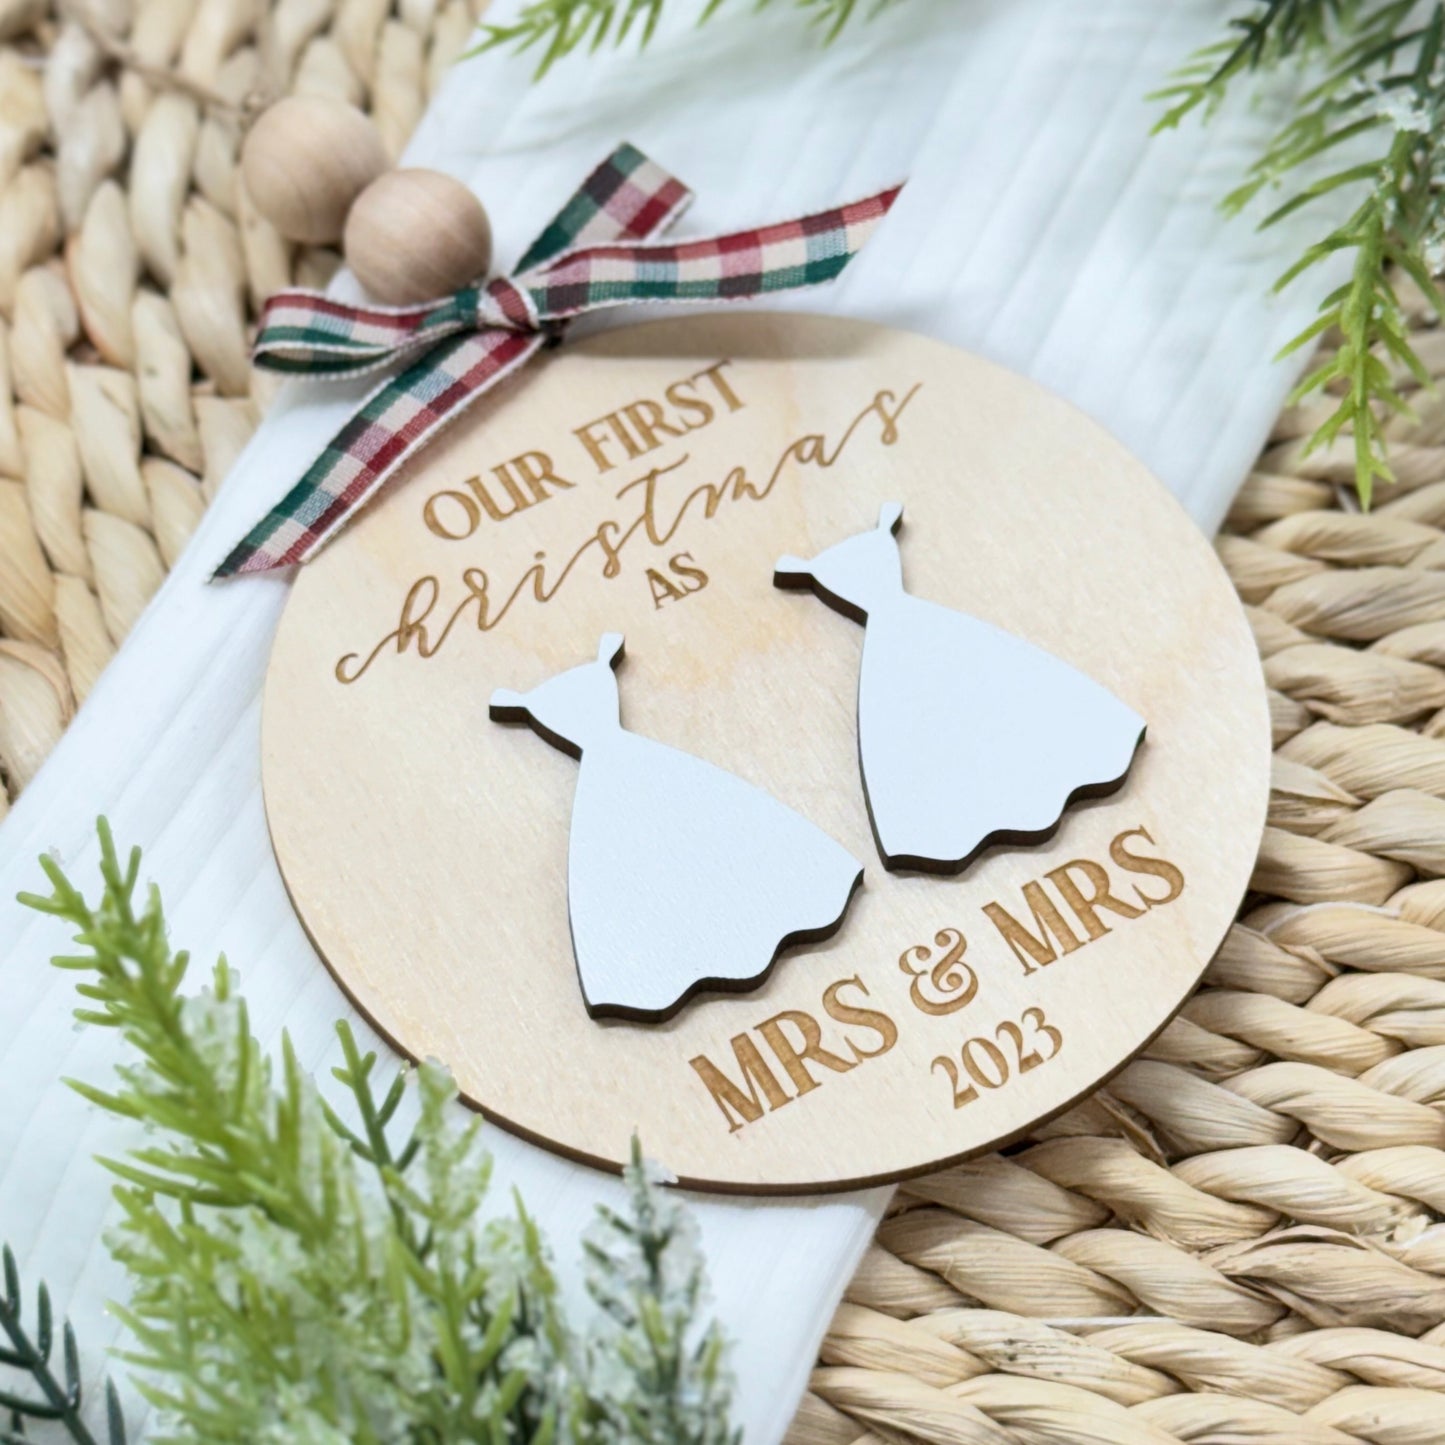 Mrs & Mrs Christmas Tree Ornament | Newlywed Christmas Ornament